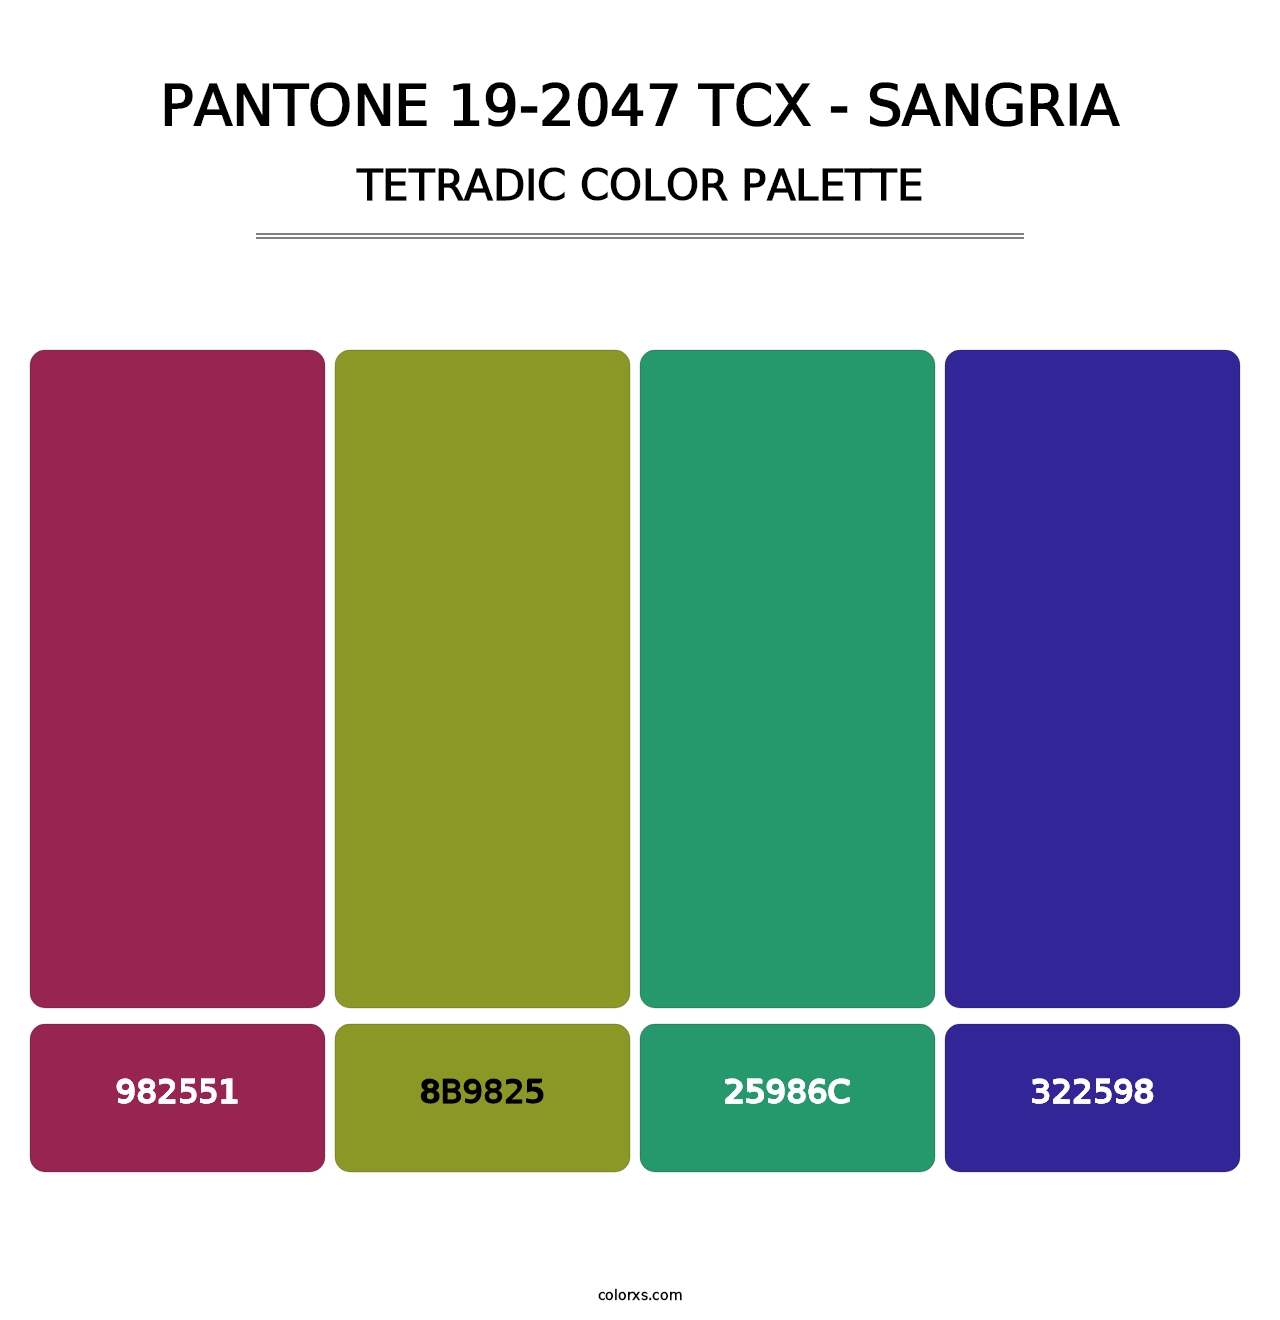 PANTONE 19-2047 TCX - Sangria - Tetradic Color Palette